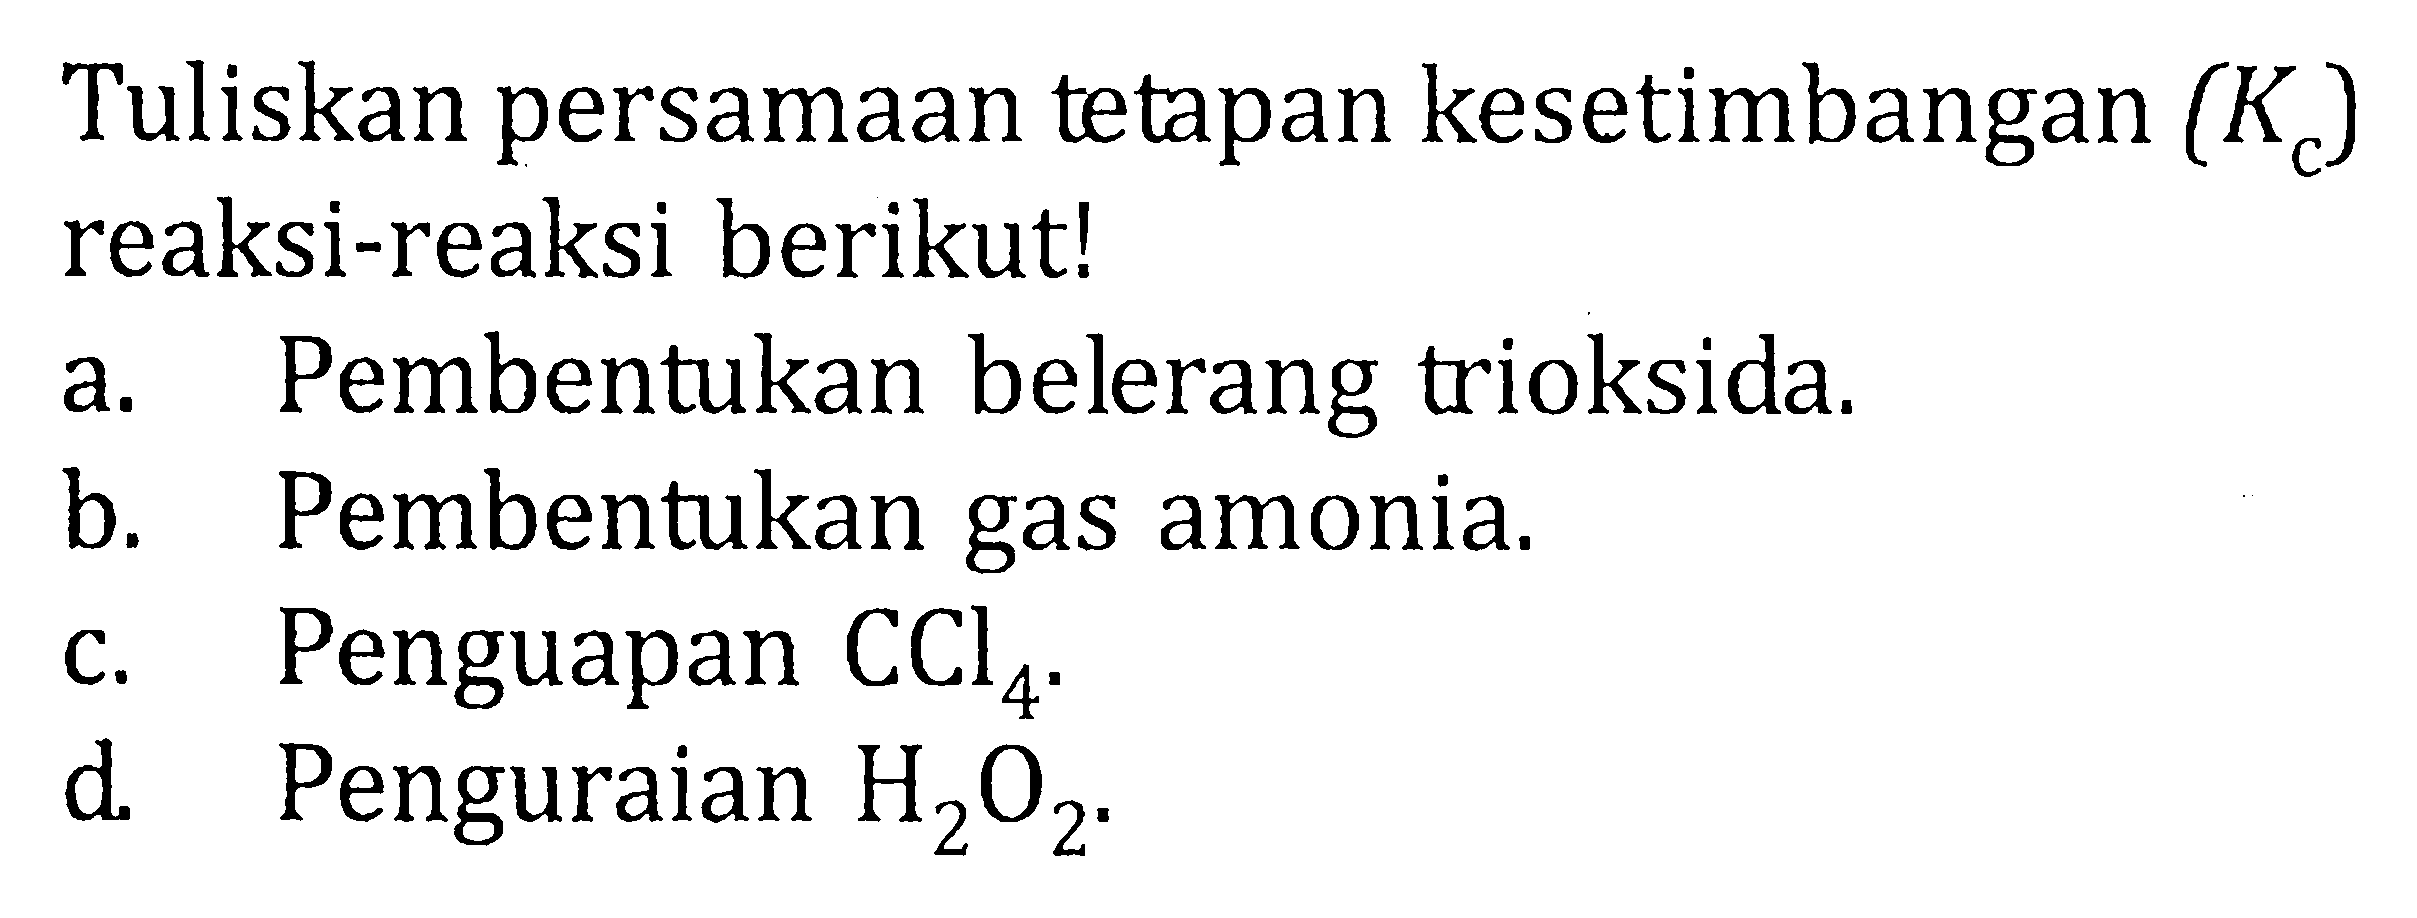 Tuliskan persamaan tetapan kesetimbangan (Kc) reaksi-reaksi berikut! a. Pembentukan belerang trioksida. b Pembentukan gas amonia. C. Penguapan CCl4. d Penguraian H2O2.